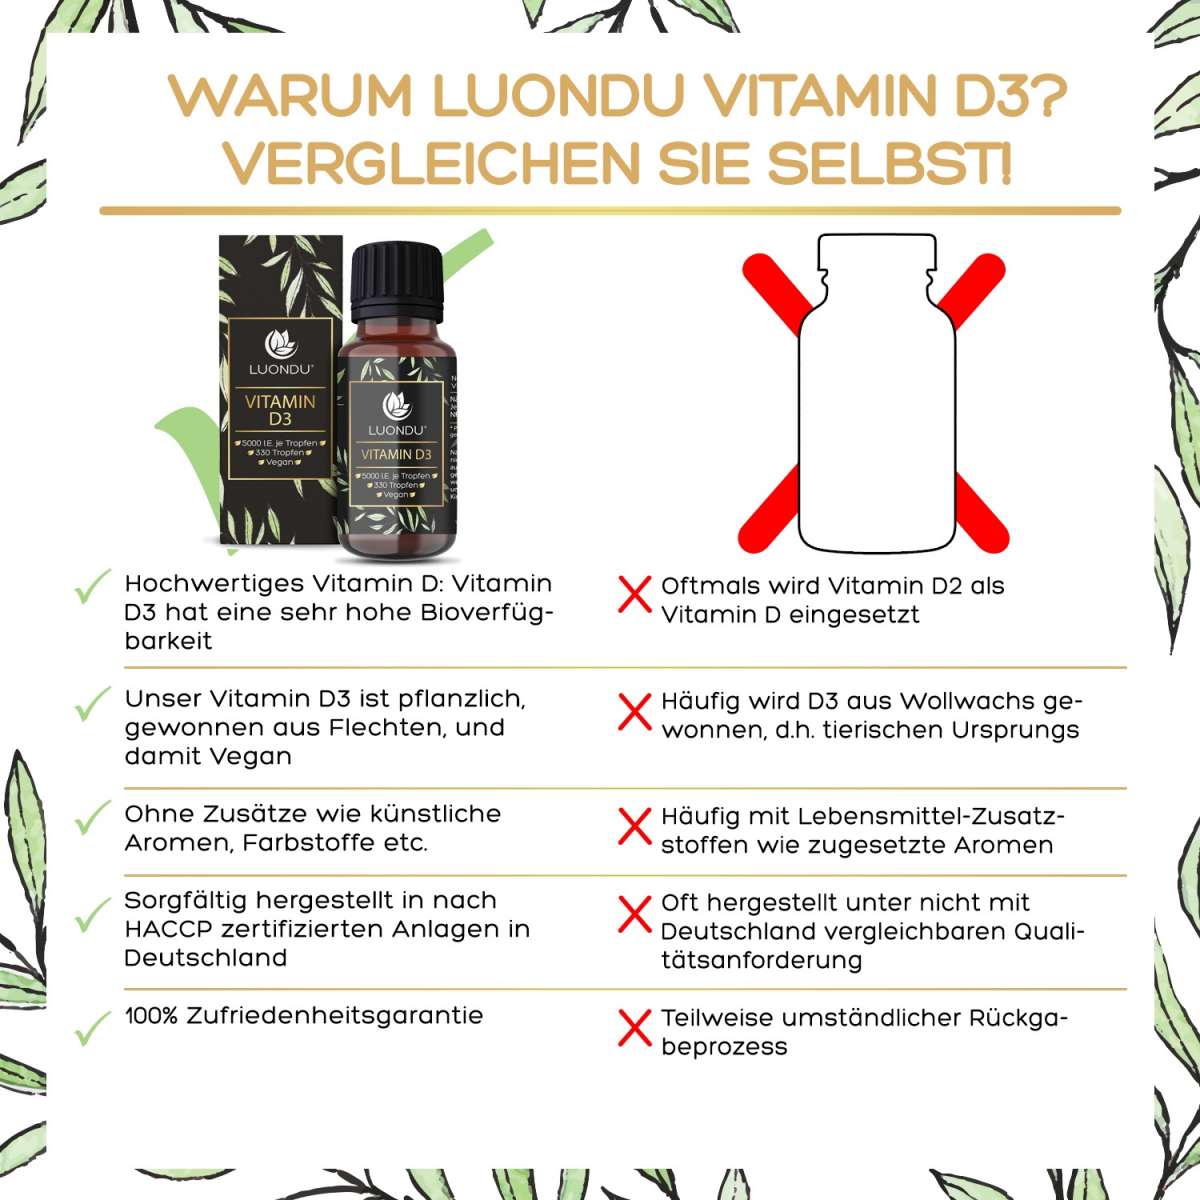 MHD Ware- Luondu Vitamin D3 5000 I.E. Vegan aus Flechten - 330 Tropfen